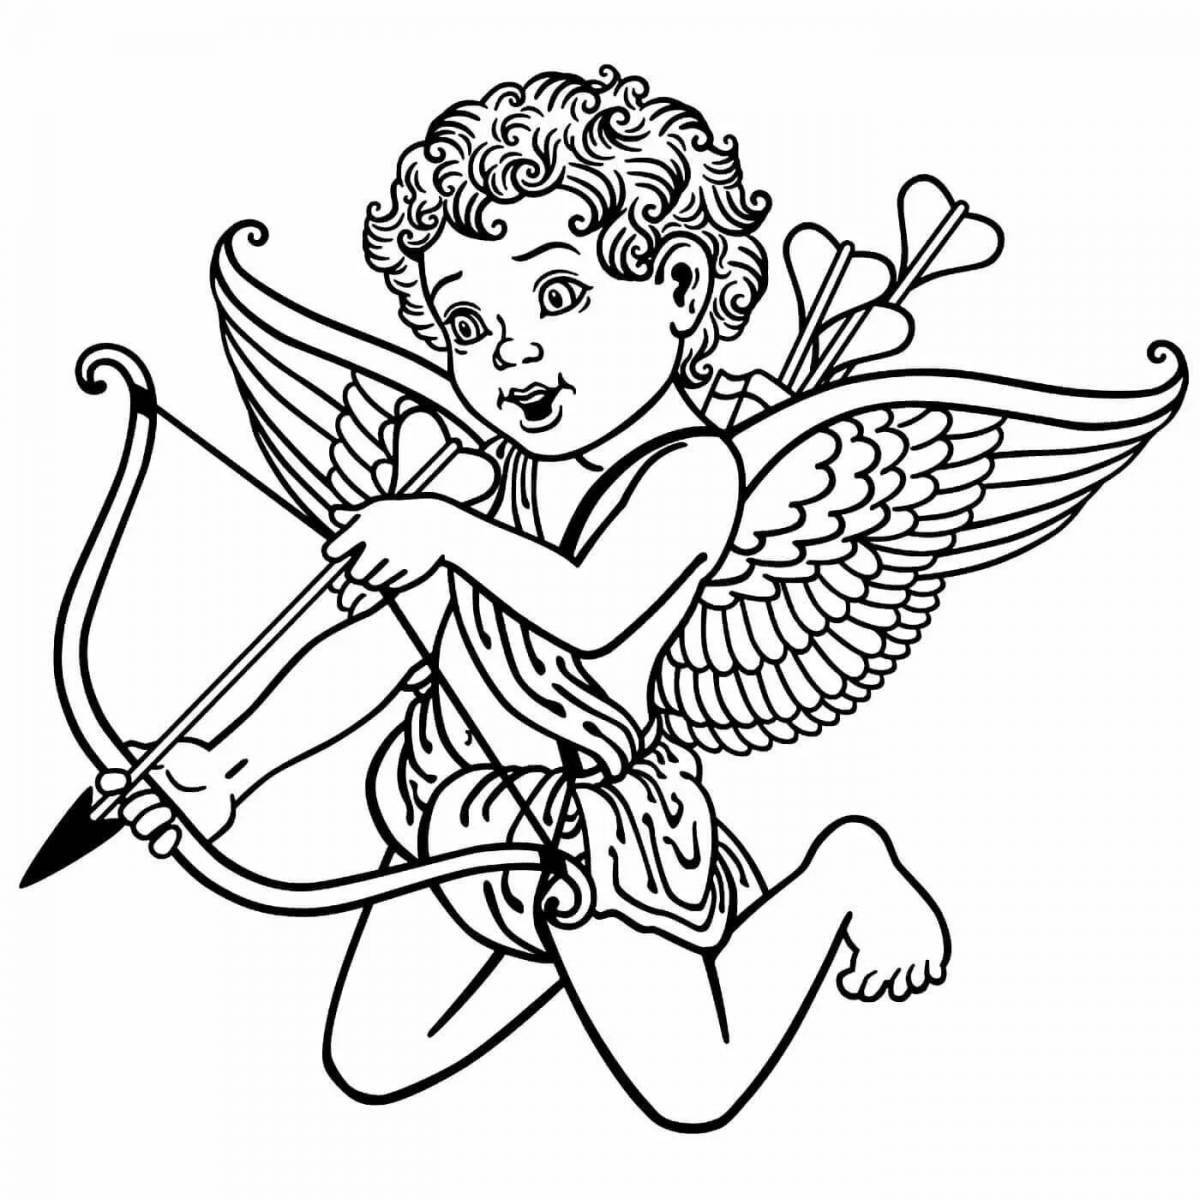 Joyful cupid with heart coloring book